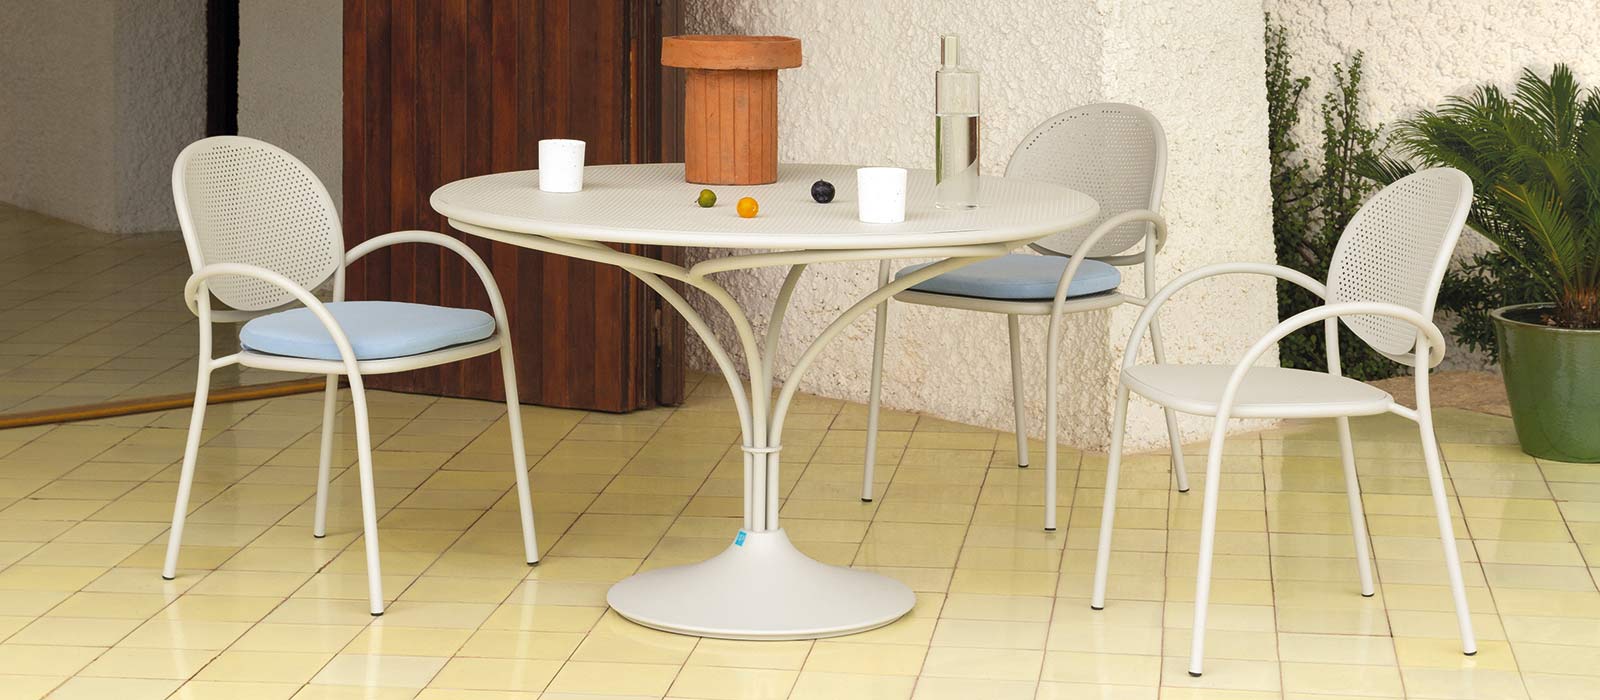 Tables and coffe tables - Unopiù - 2